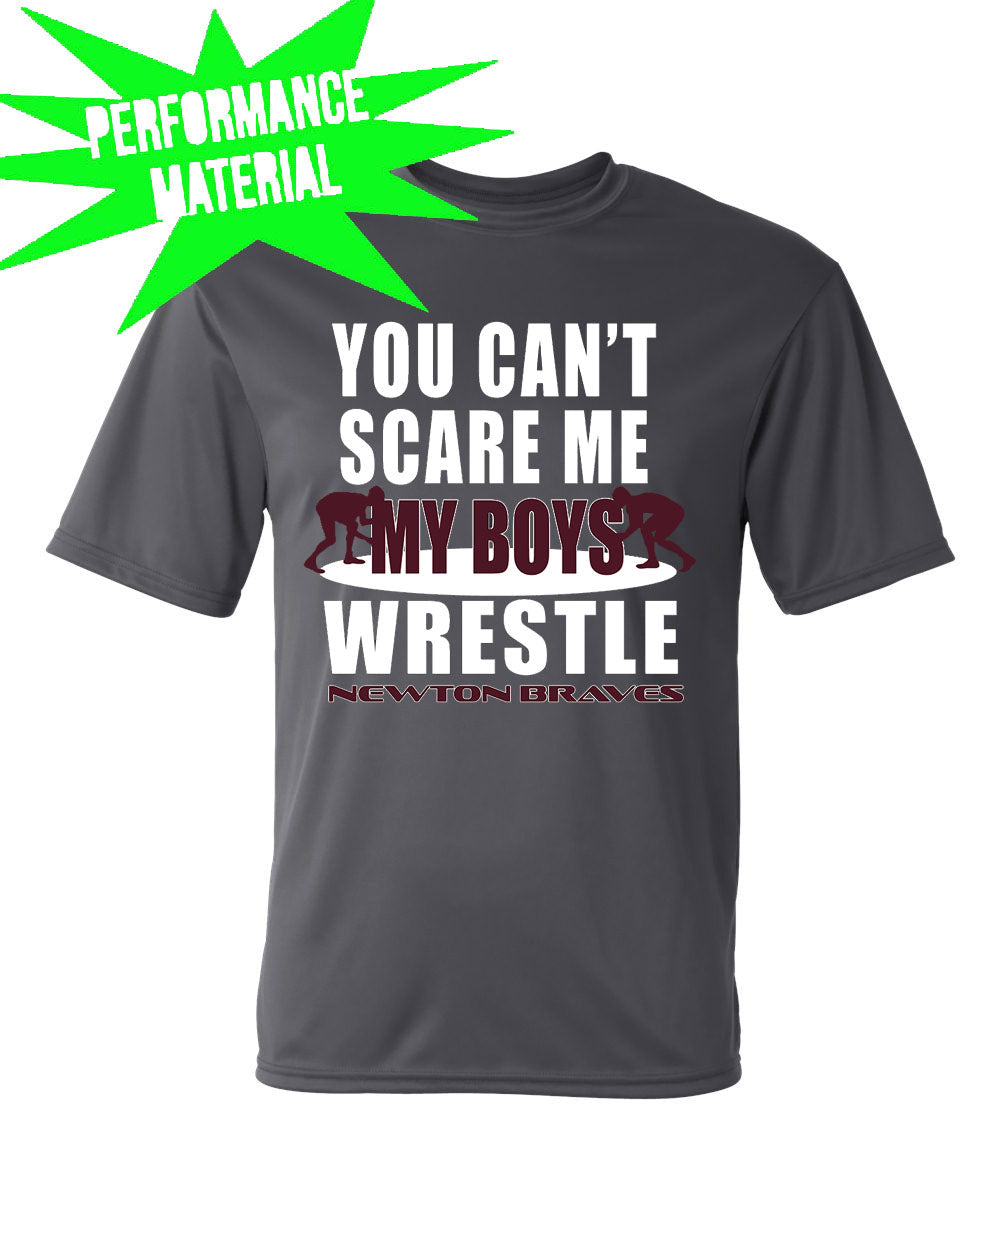 Newton Wrestling Performance Material T-Shirt Design 11